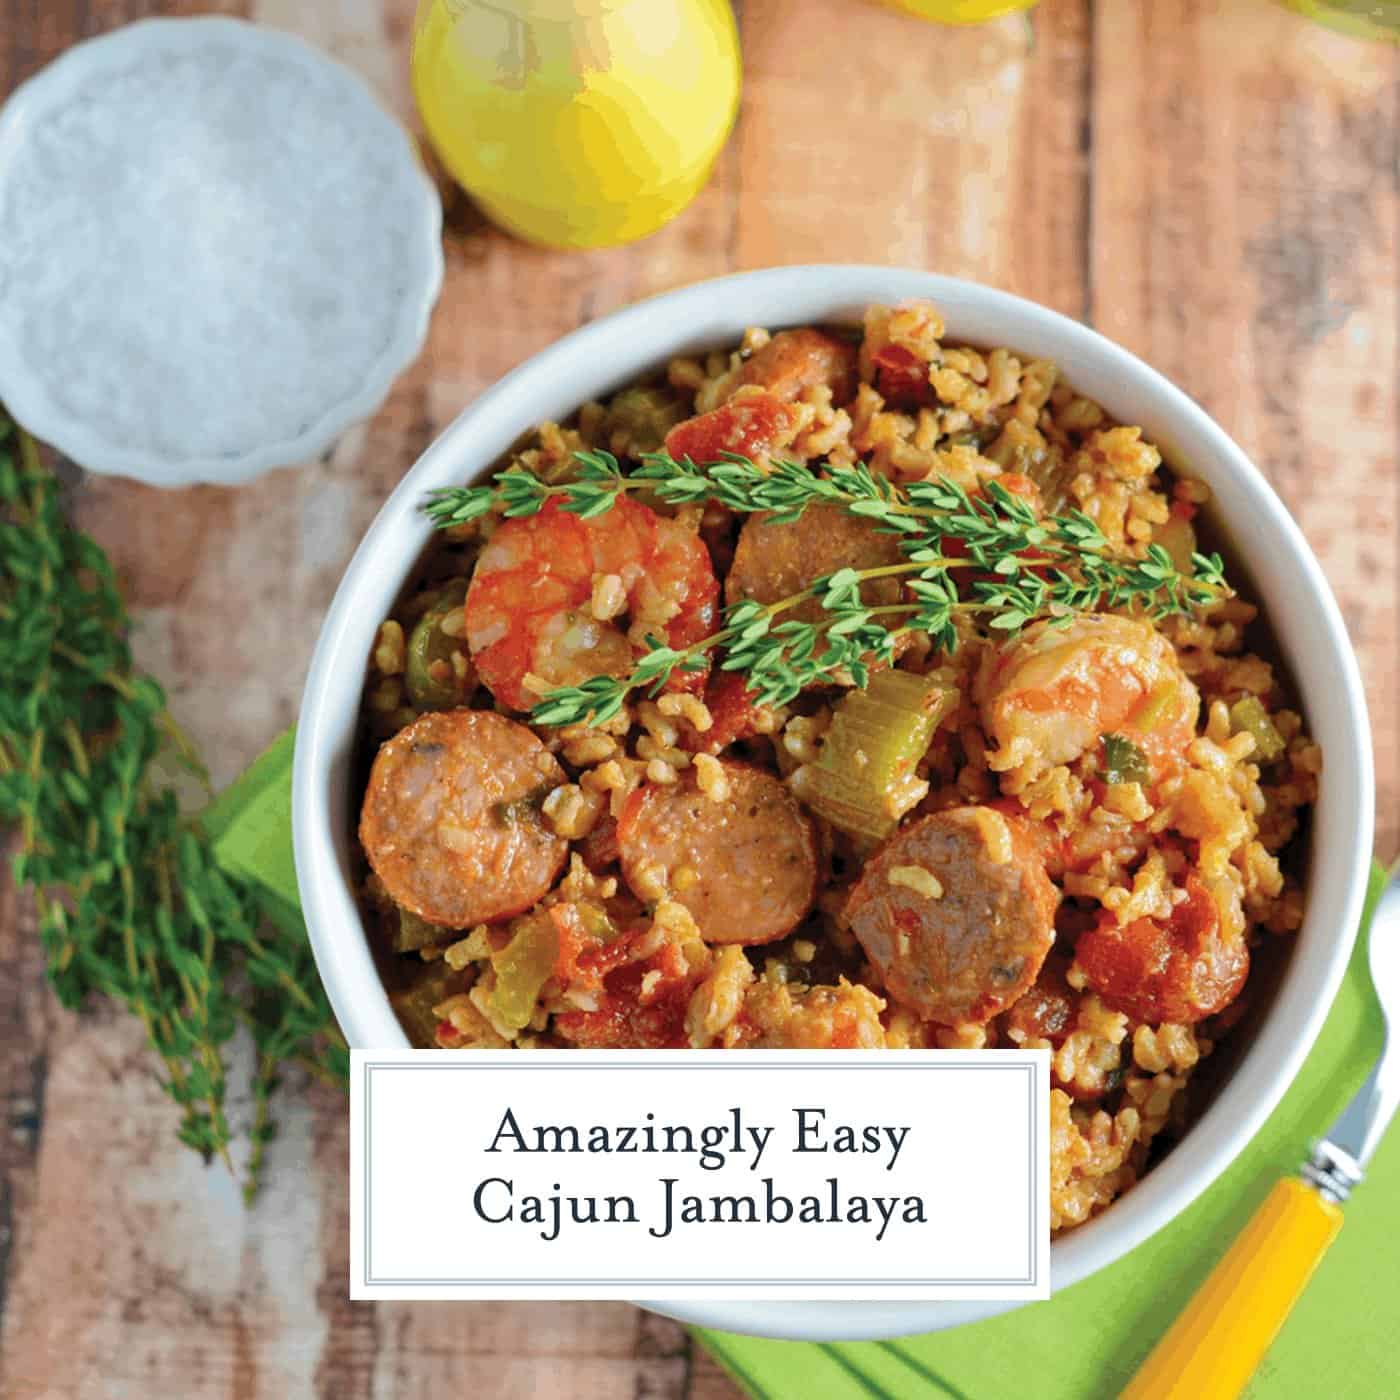 This Cajun Jambalaya is a mouthwatering recipe that can be ready in less than an hour. Andouille turkey sausage and shrimp give this recipe so much flavor! #cajunjambalaya #healthyjambalaya #easyjambalaya www.savoryexperiments.com 